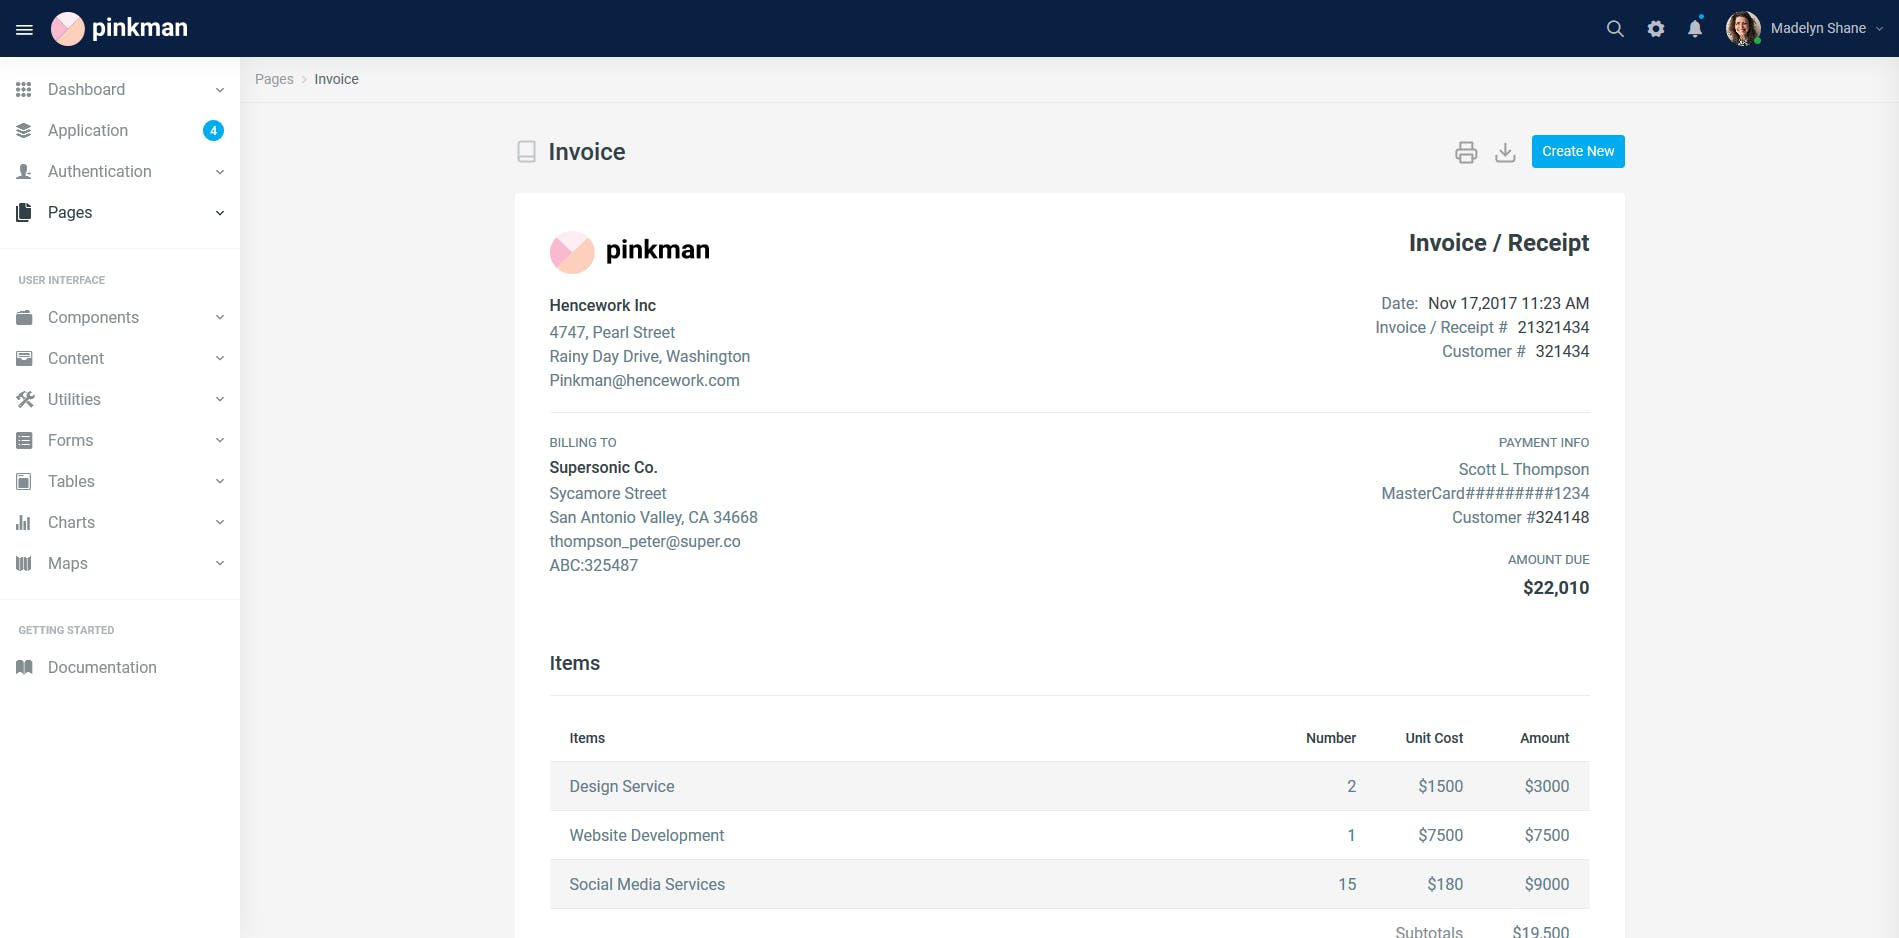 Bootstrap架构网站管理系统模板素材库精选下载 Pinkman – Bootstrap 4 Admin Dashboard Template插图(14)